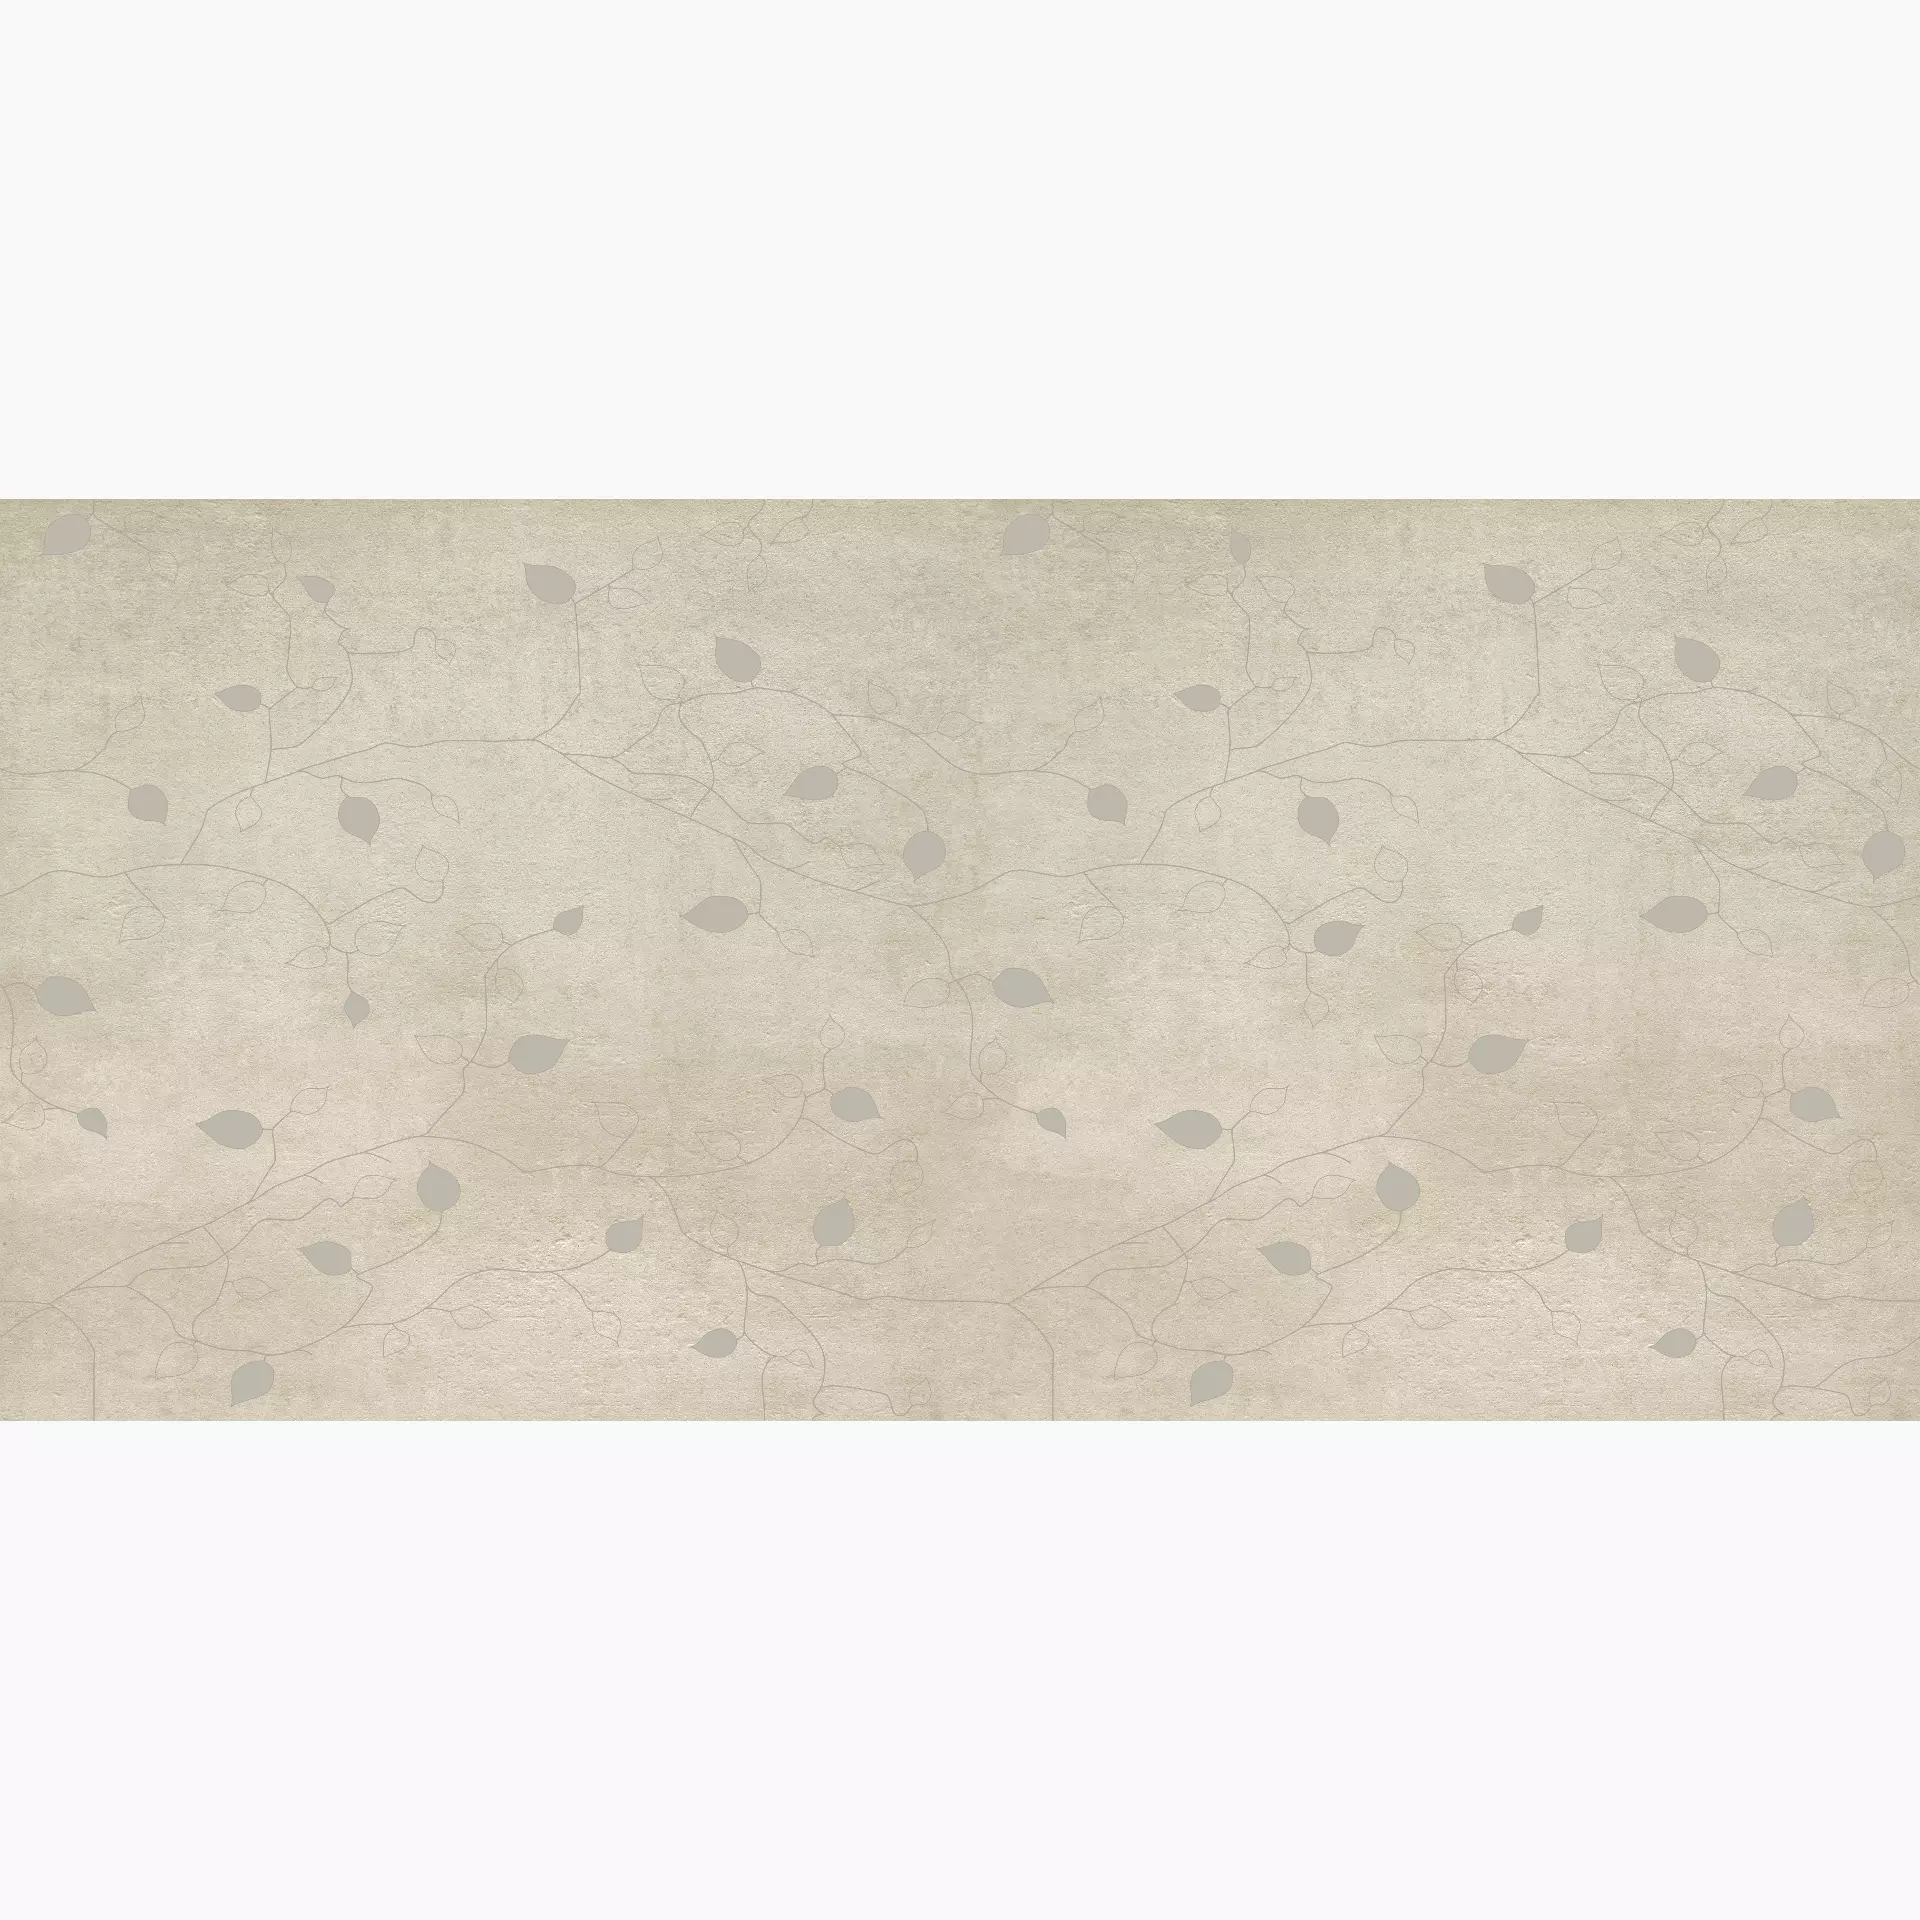 Gigacer Concrete Signs White Matt Decor Buds 6CONCR250WHIBUD 120x250cm 6mm